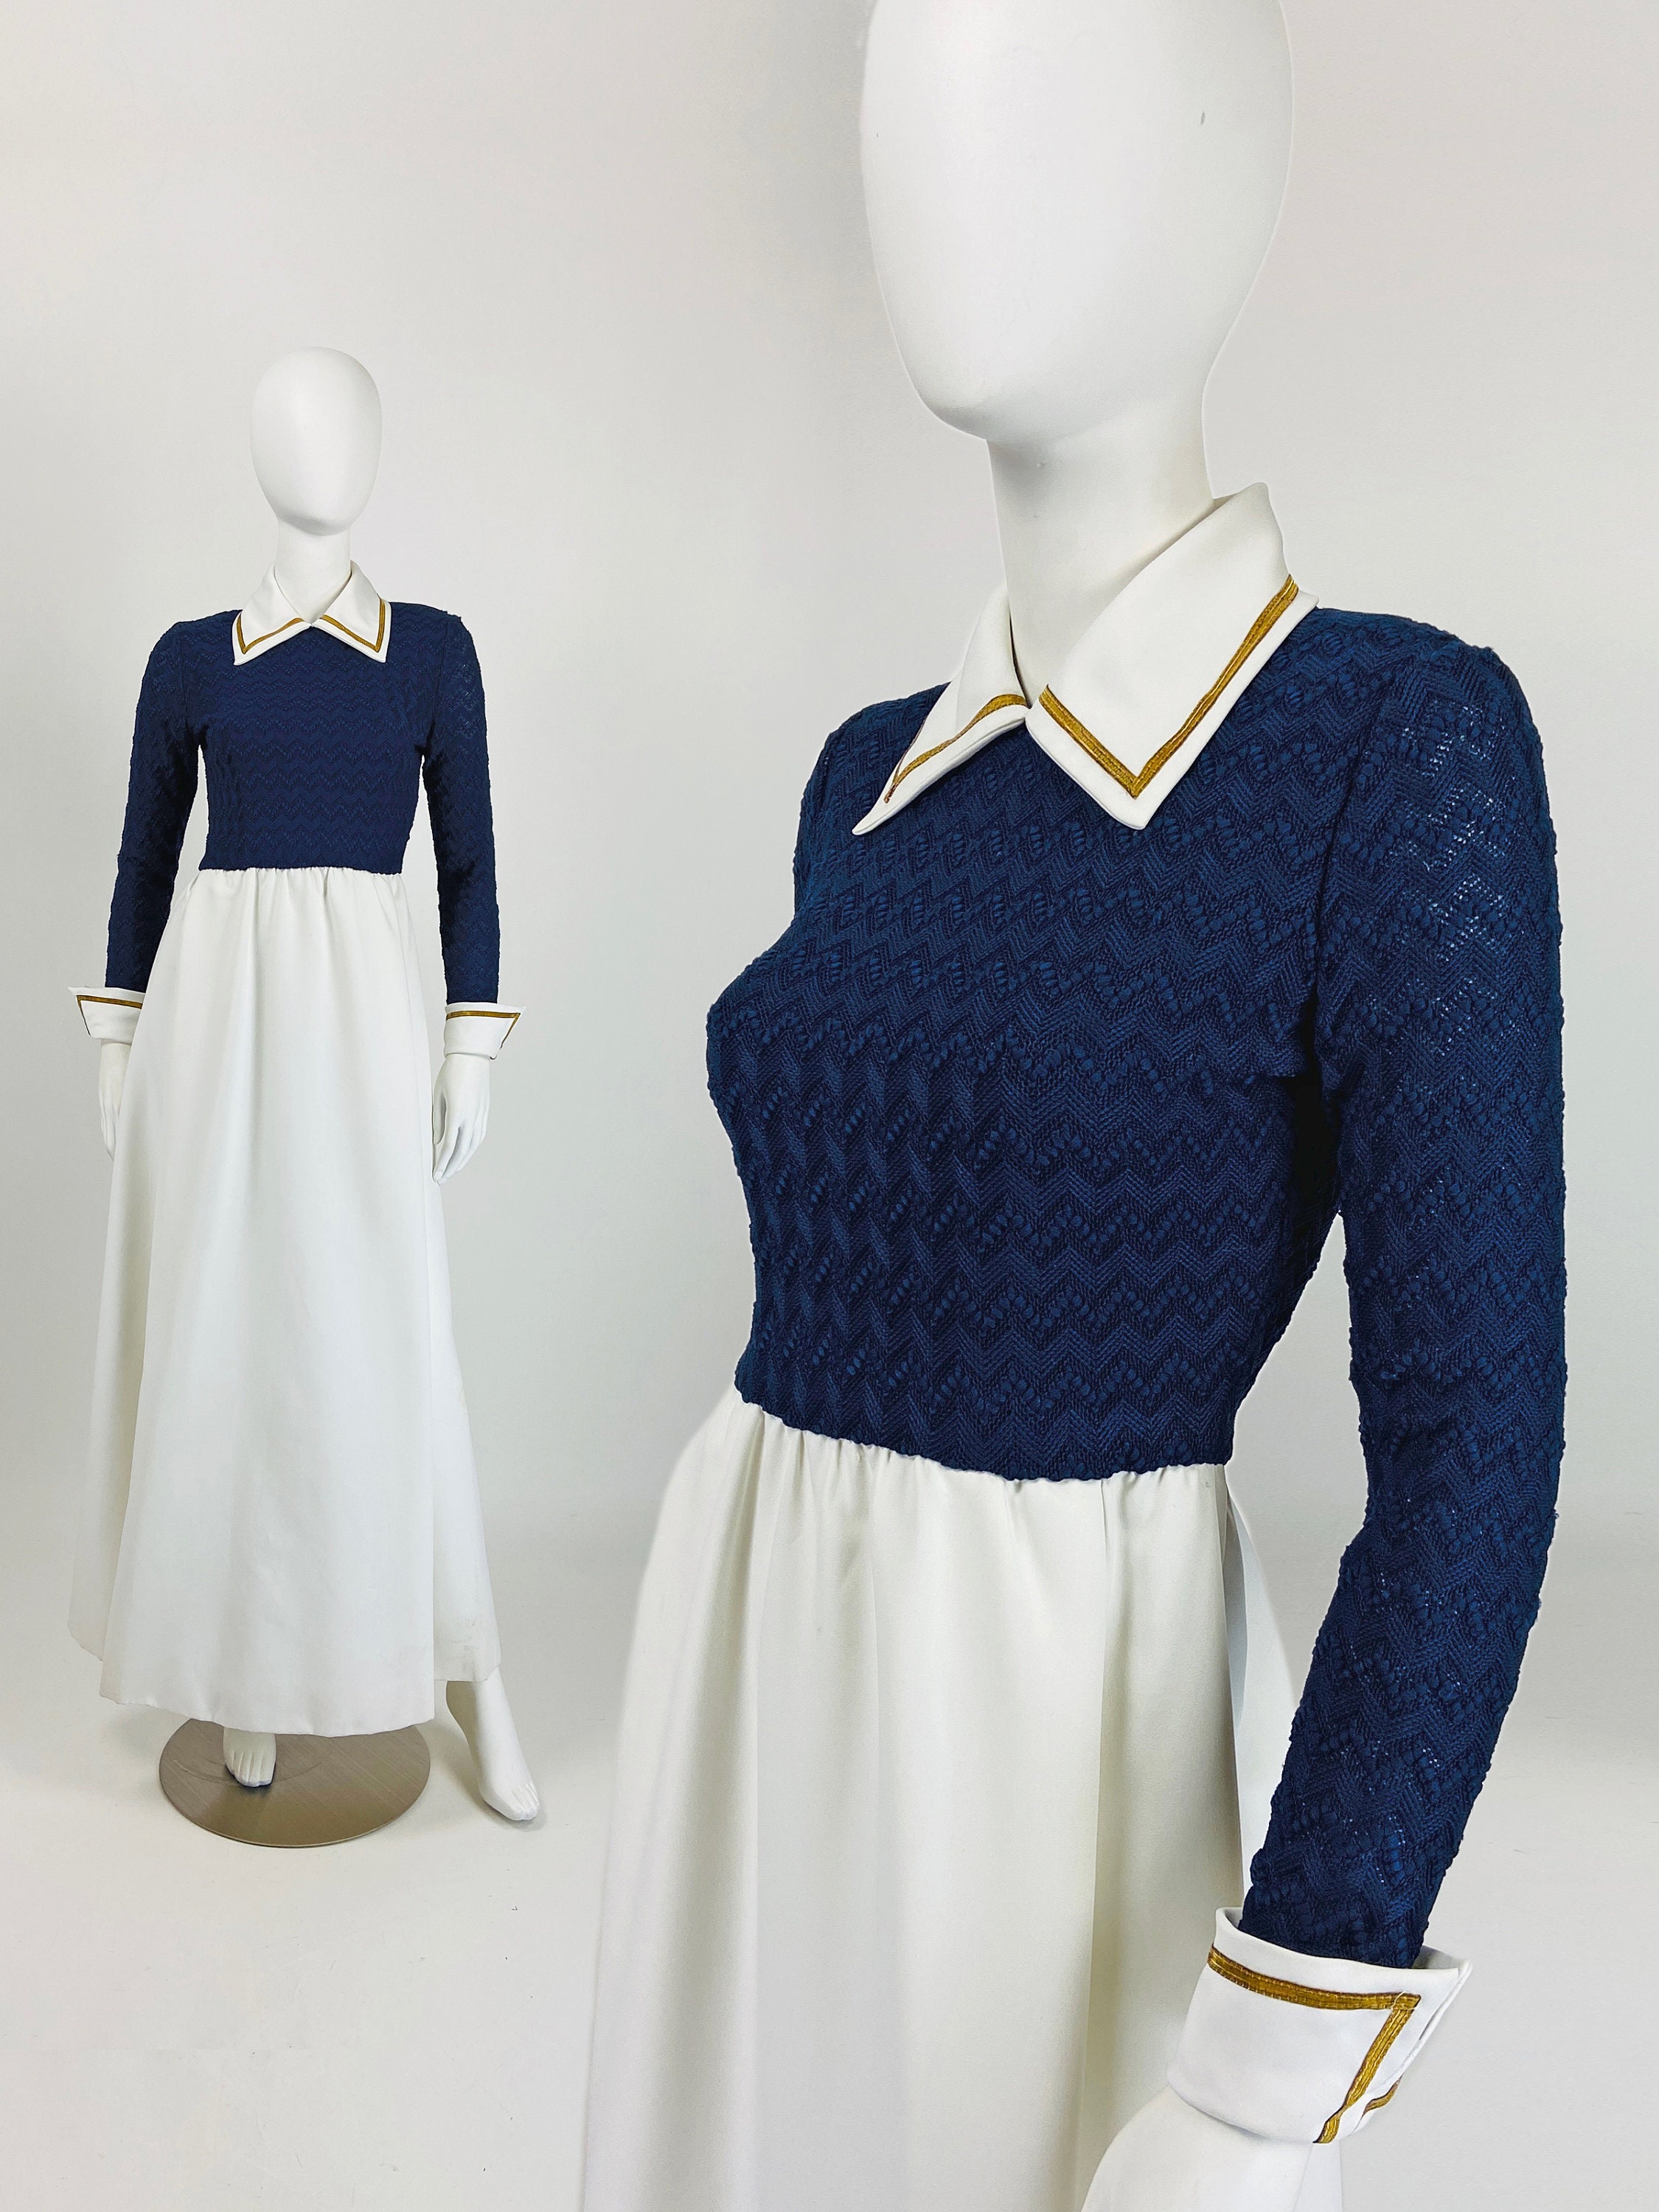 Vintage 70S Sailor Dress, Mod Maxi Nautical Layered Party Navy Blue Small Size 4 Us, 8 Uk B018